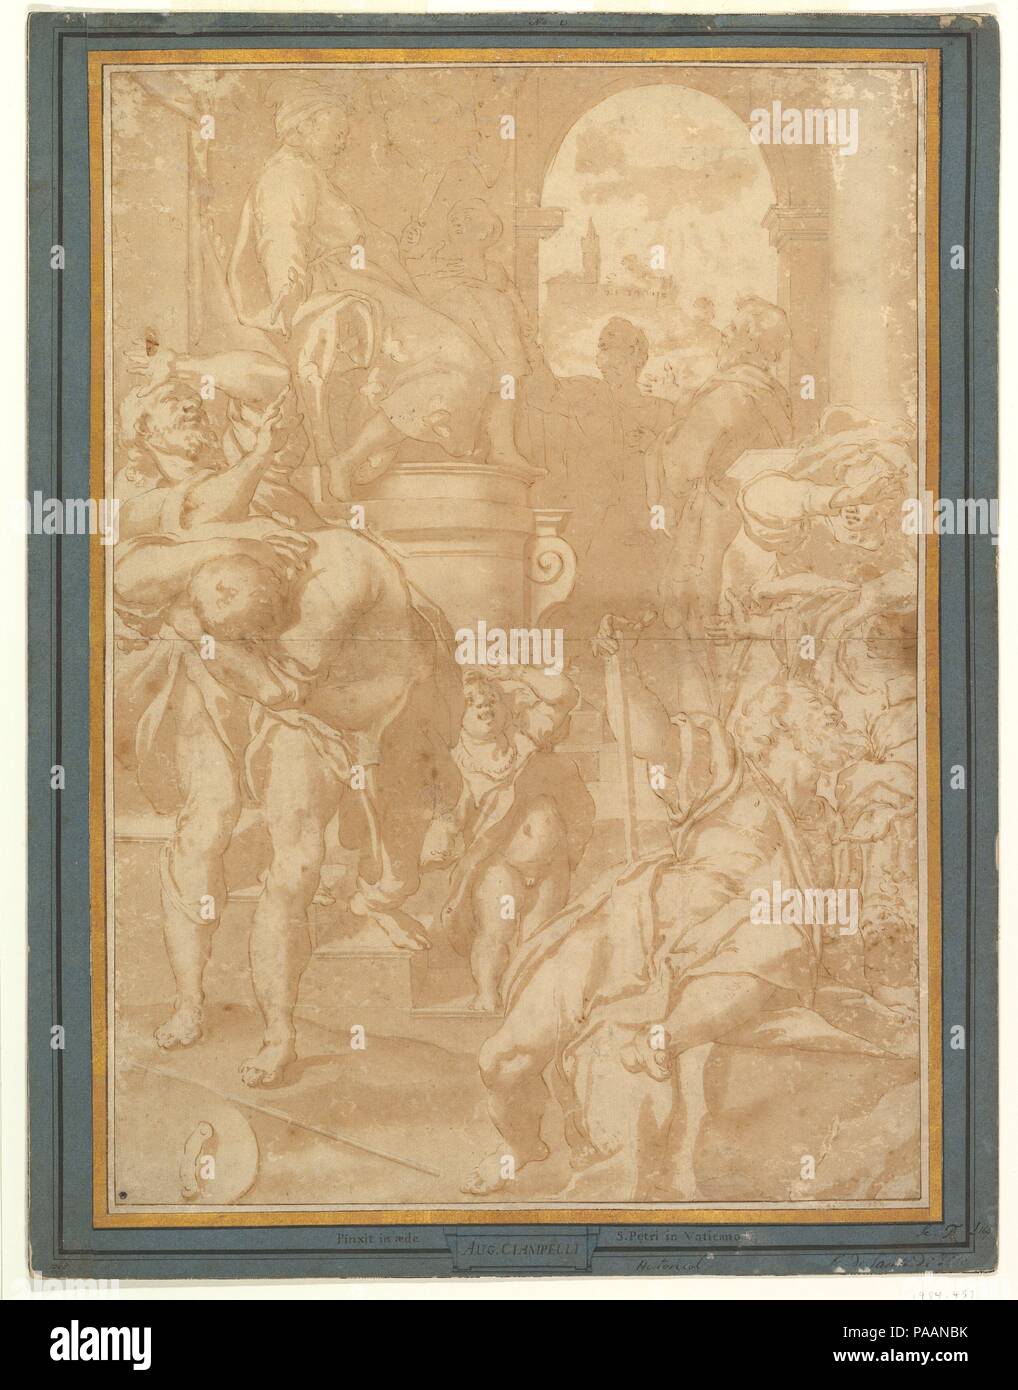 The Plague of Flies (Exodus 8:21). Artist: Workshop of Federico Zuccaro (Zuccari) (Italian, Sant'Angelo in Vado 1540/42-1609 Ancona). Dimensions: 18-13/16 x 13-3/8 in.  (47.8 x 33.9 cm). Date: 1540-1609. Museum: Metropolitan Museum of Art, New York, USA. Stock Photo